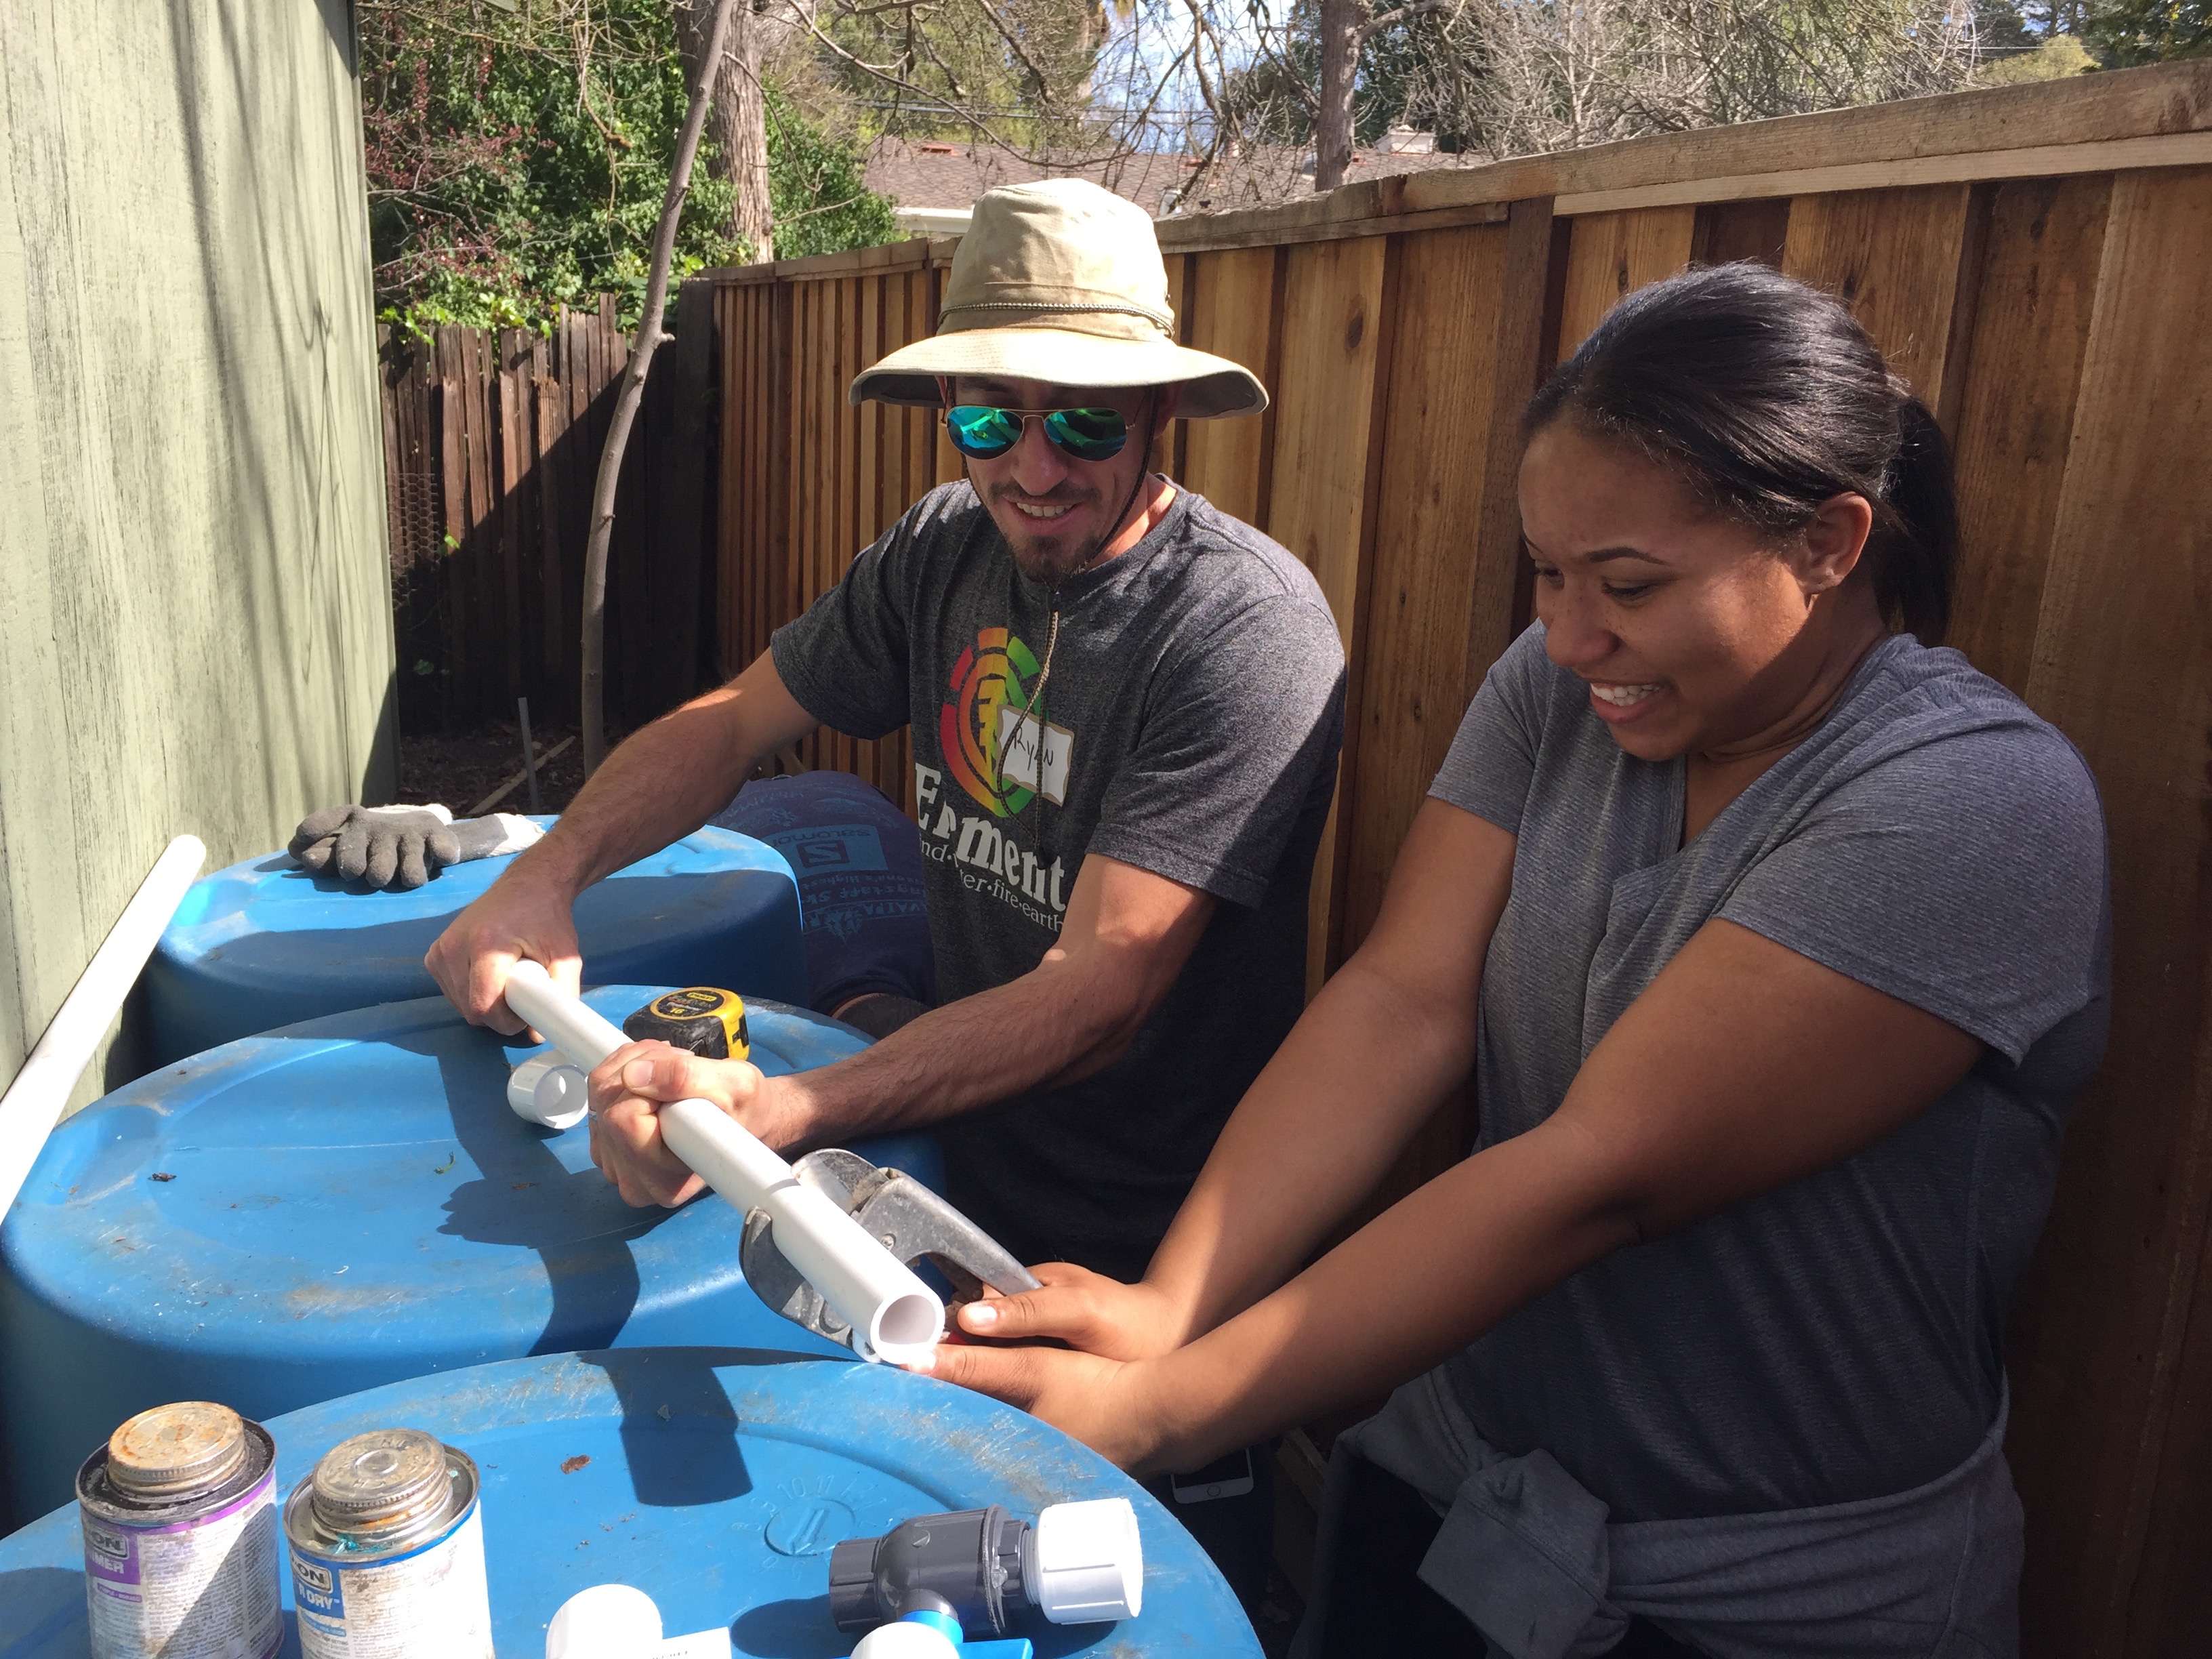 Landscape designer Ryan Kelsey shows Zakeisha Plummer how to cut PVC piping for a backyard rainwater capture system in Walnut Creek.